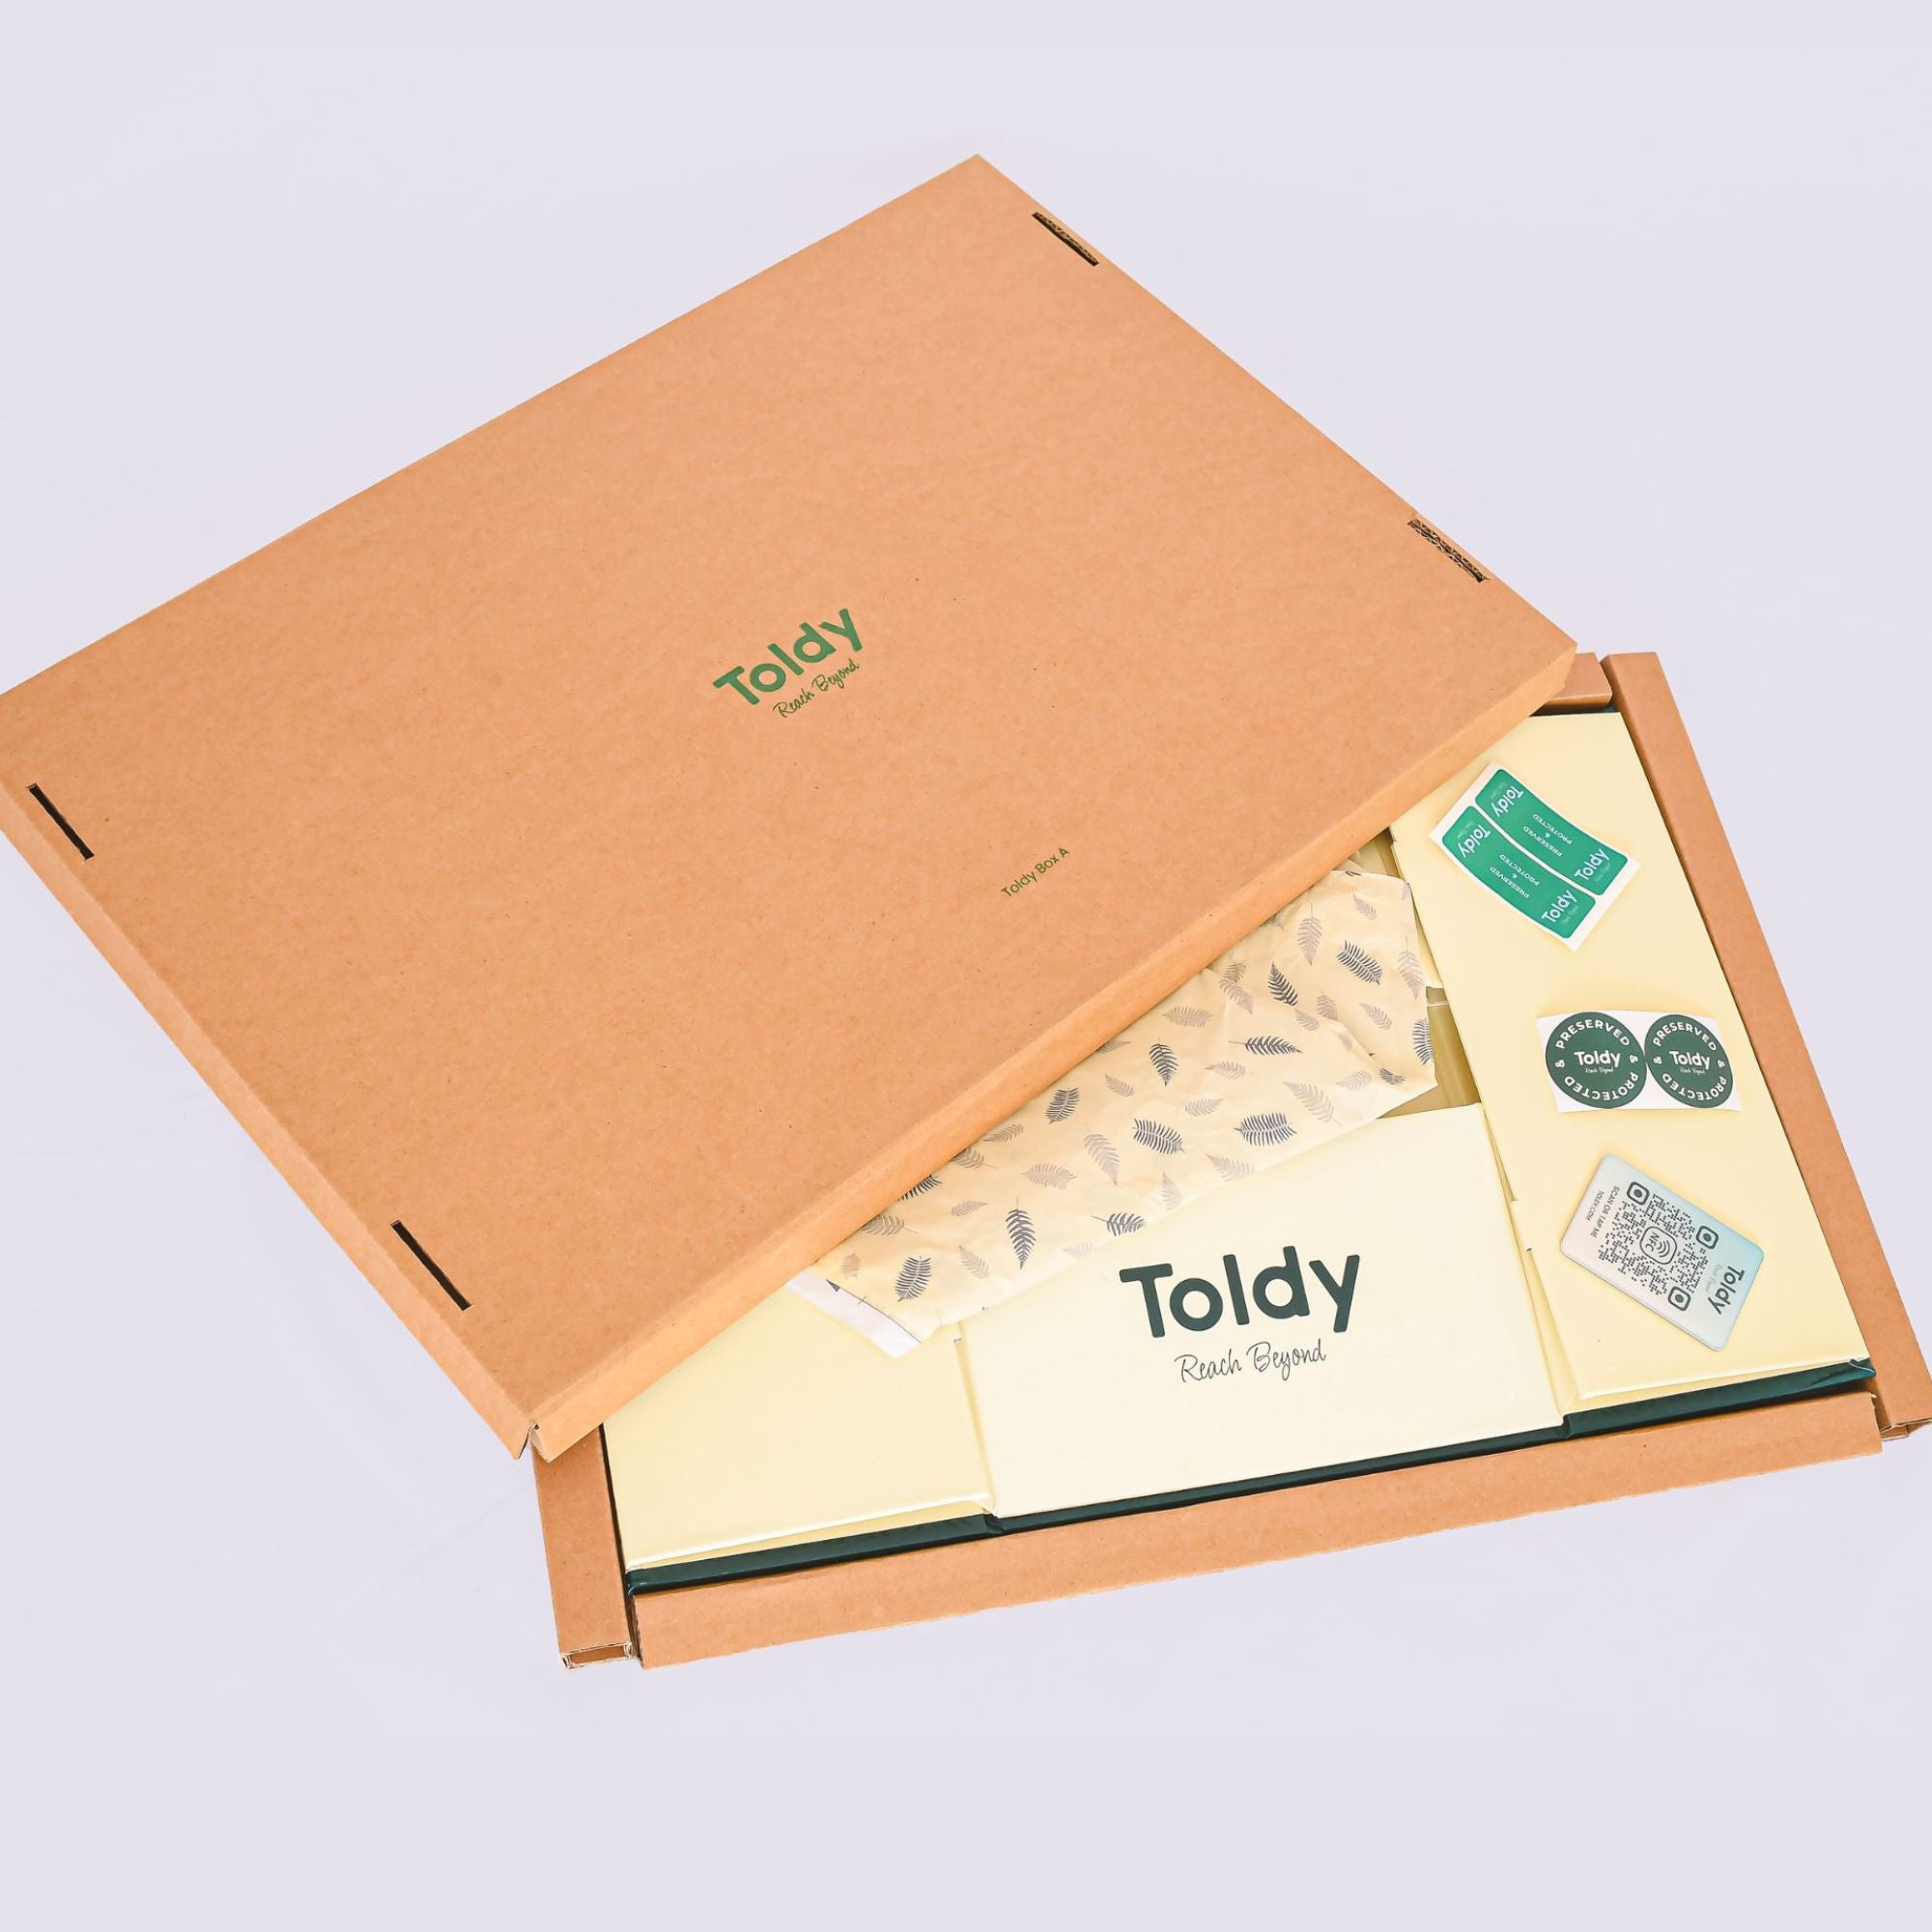 Toldy Box